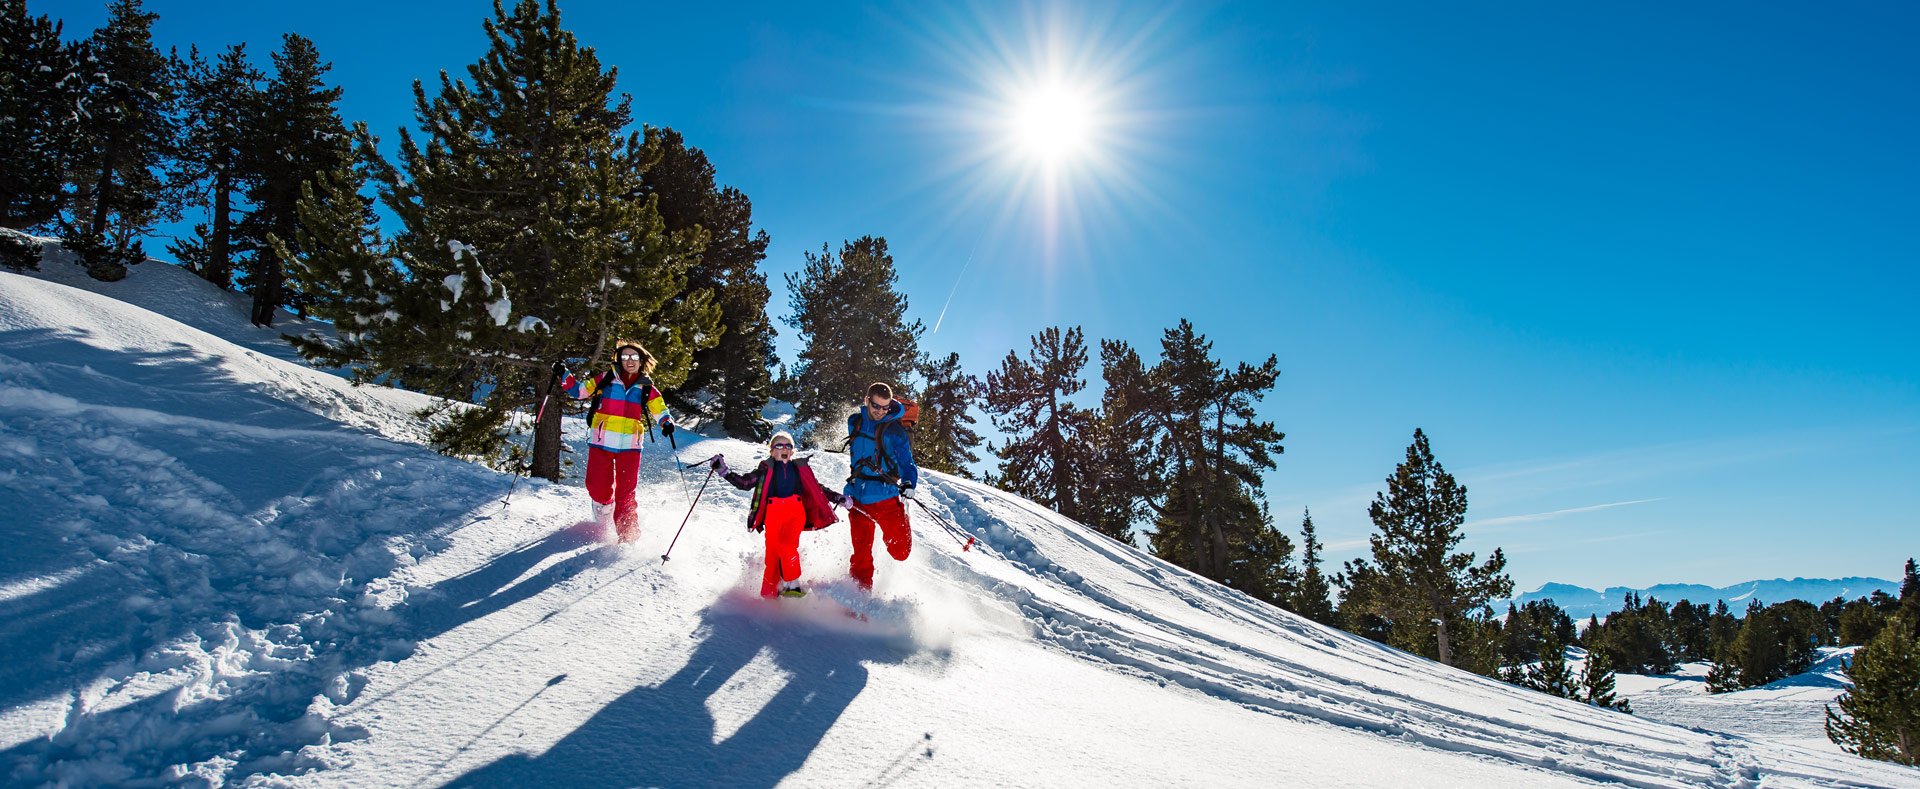 Chamrousse raquette neige famille enfant station ski montagne grenoble isère alpes france - © Images-et-reves.fr